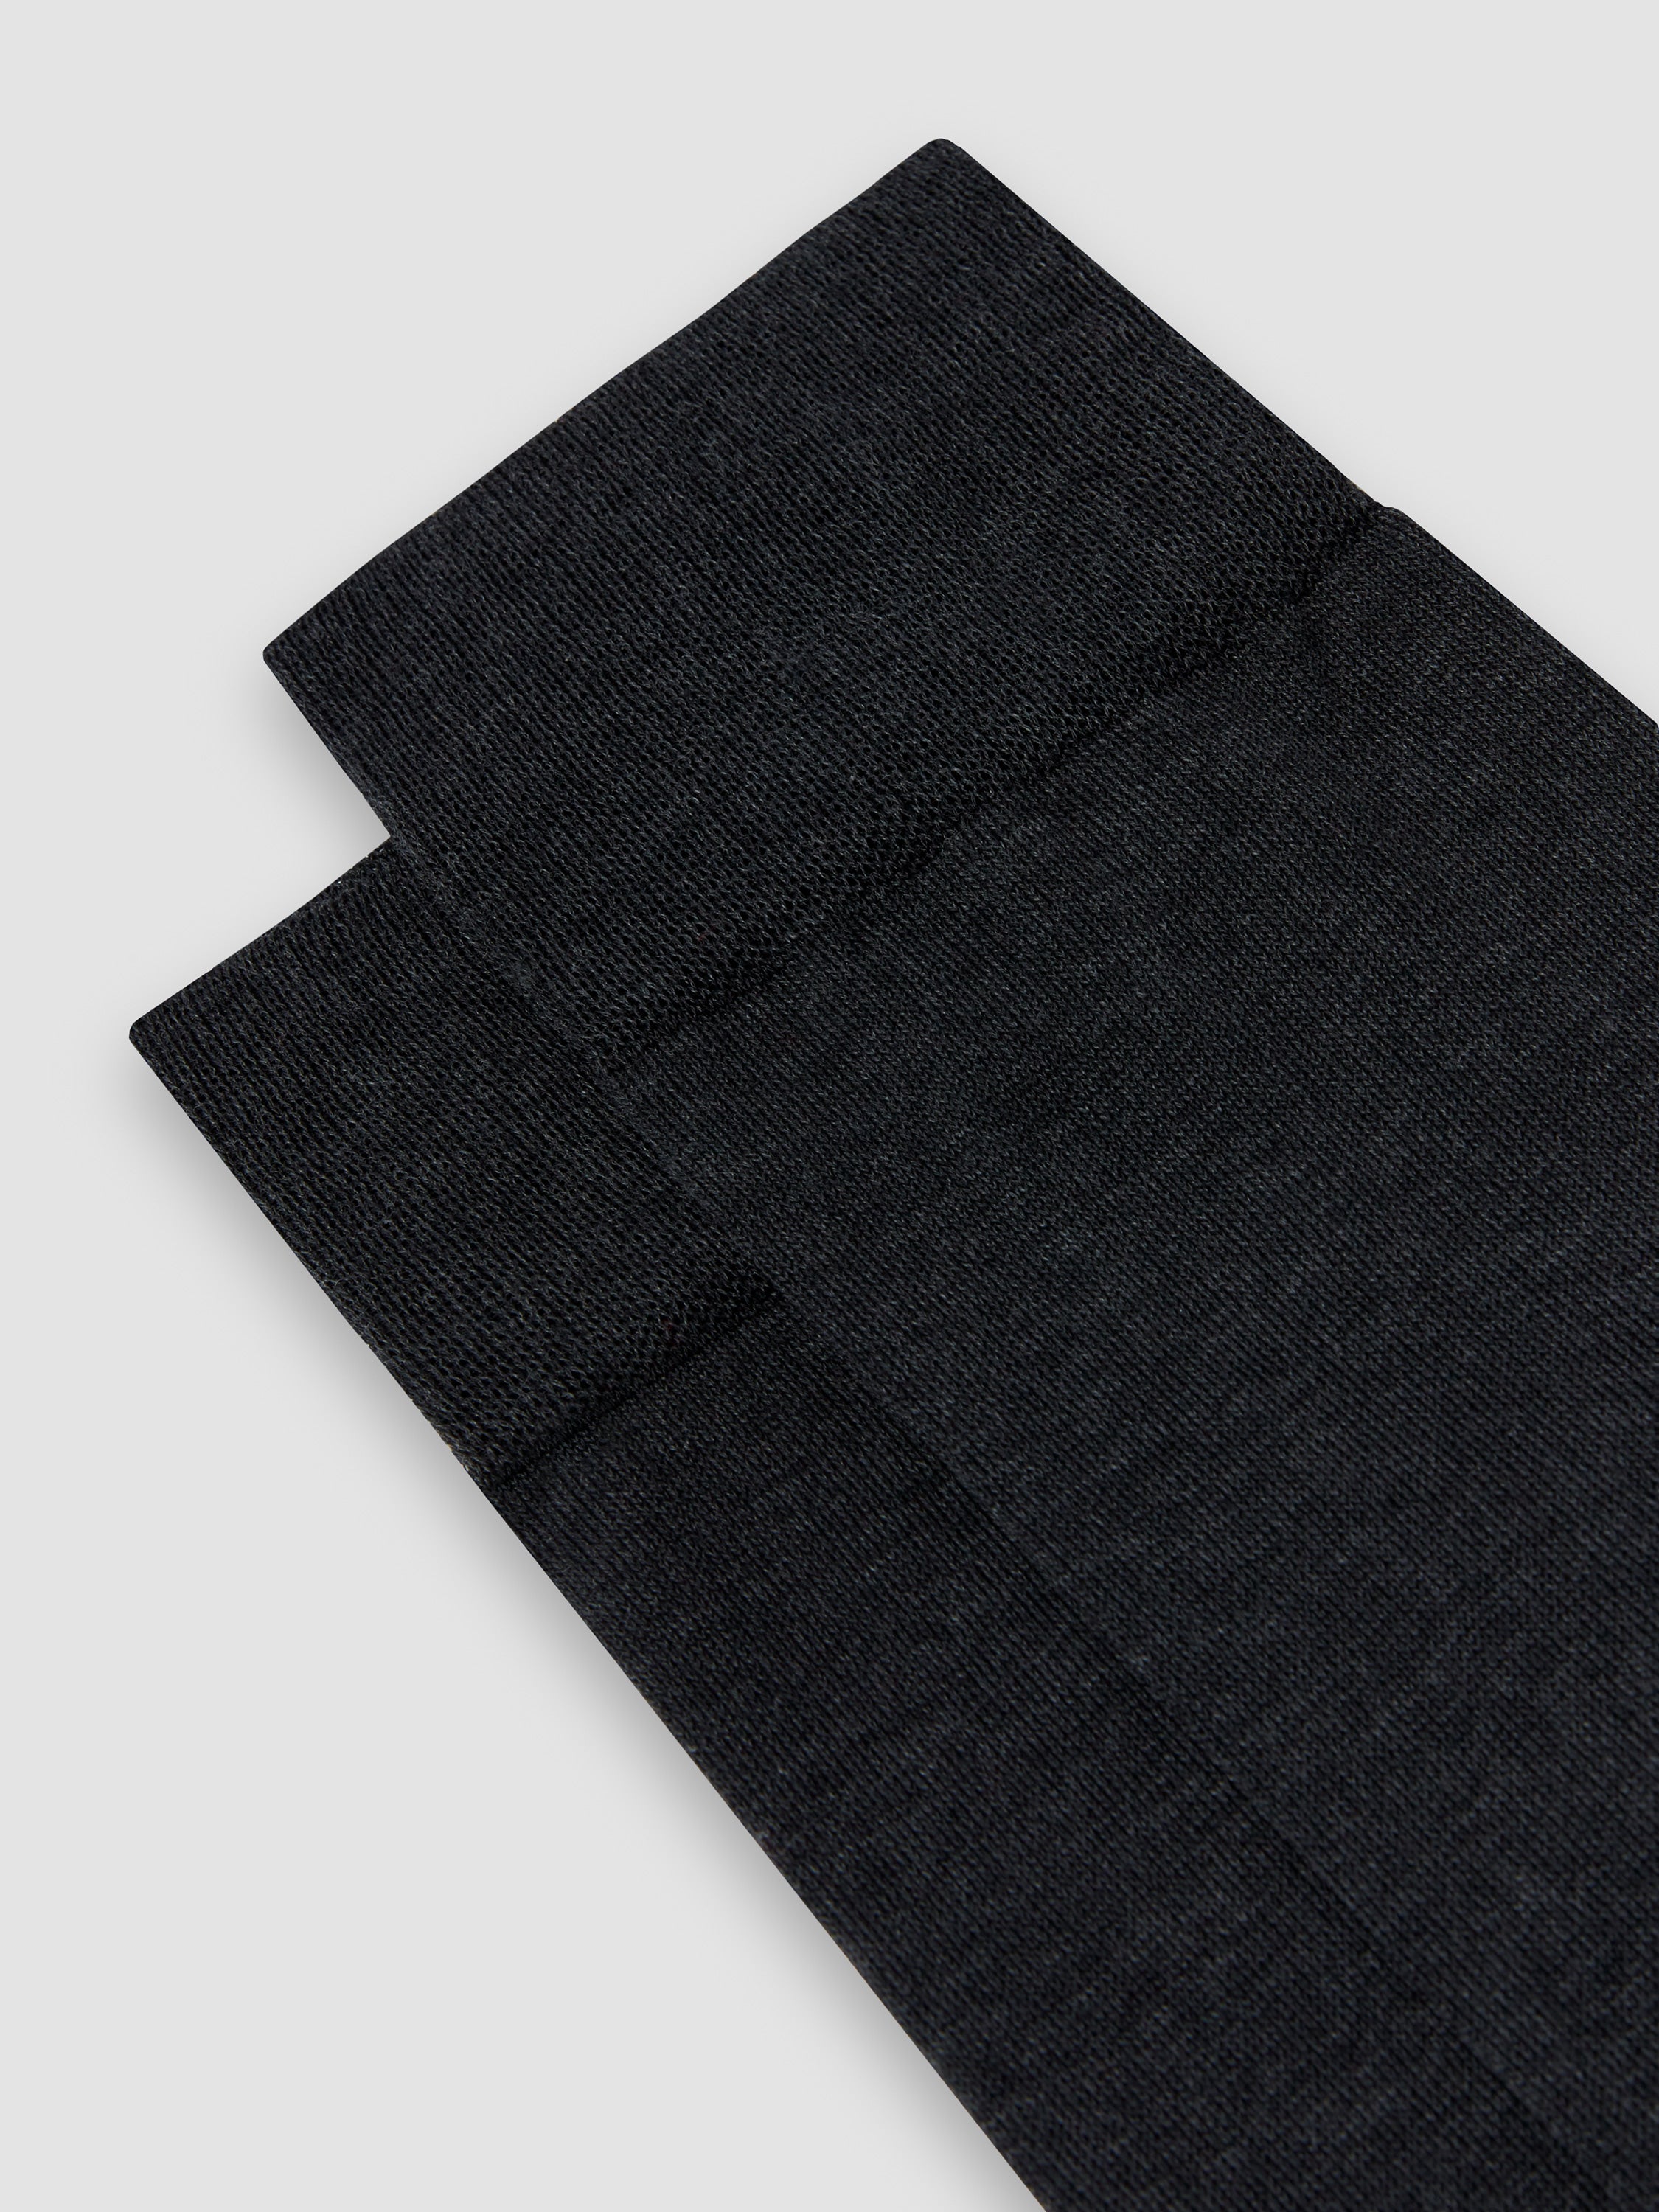 Plain Dress Sock Grey Detail Product Image